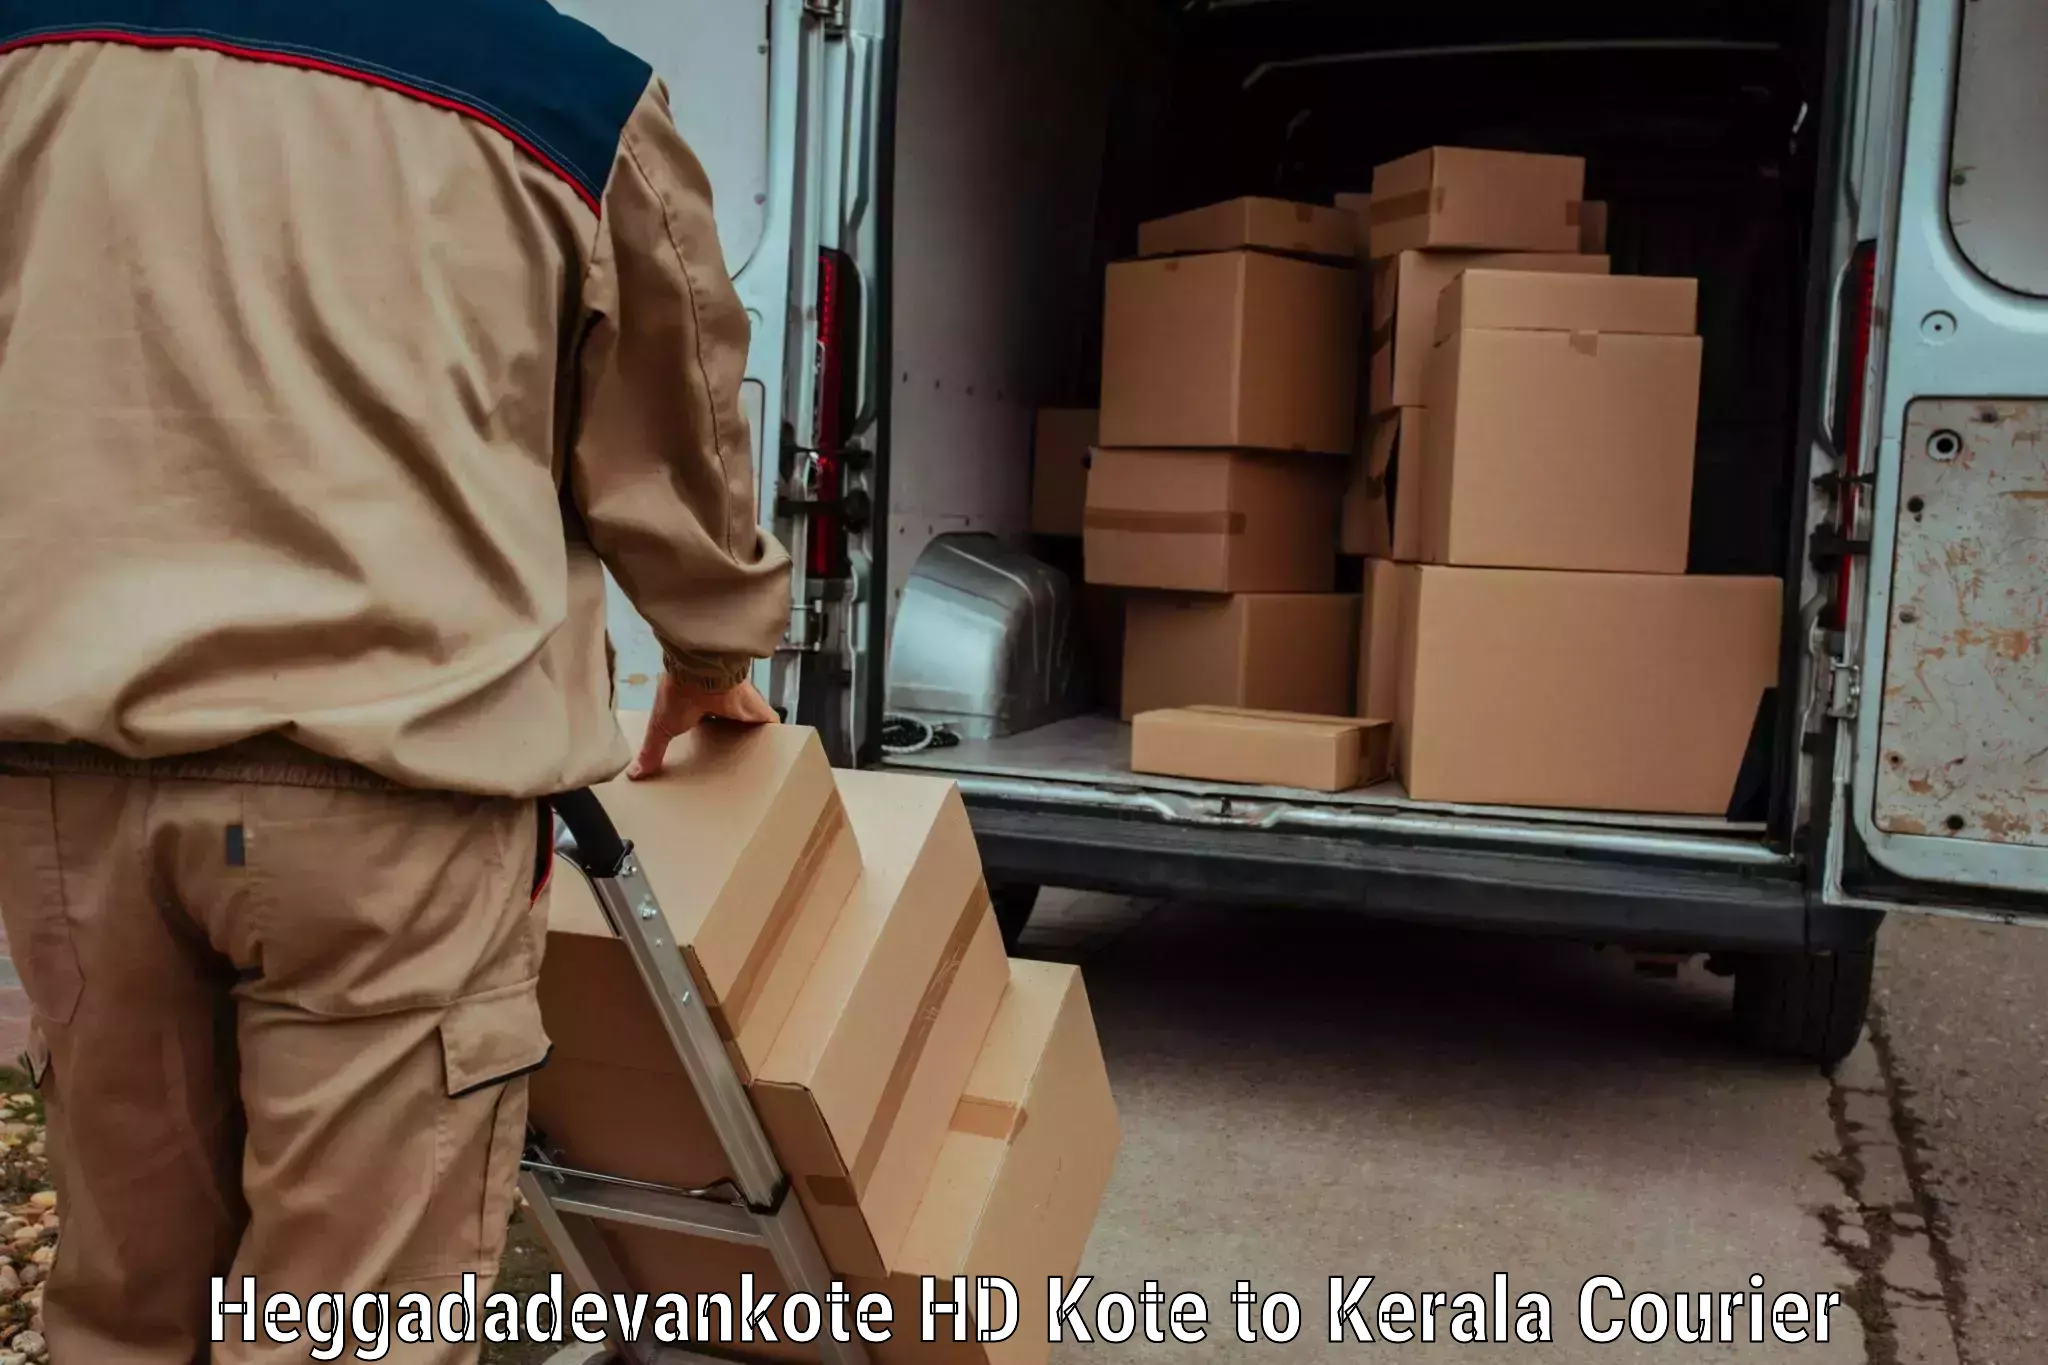 Personal parcel delivery Heggadadevankote HD Kote to Kottarakkara